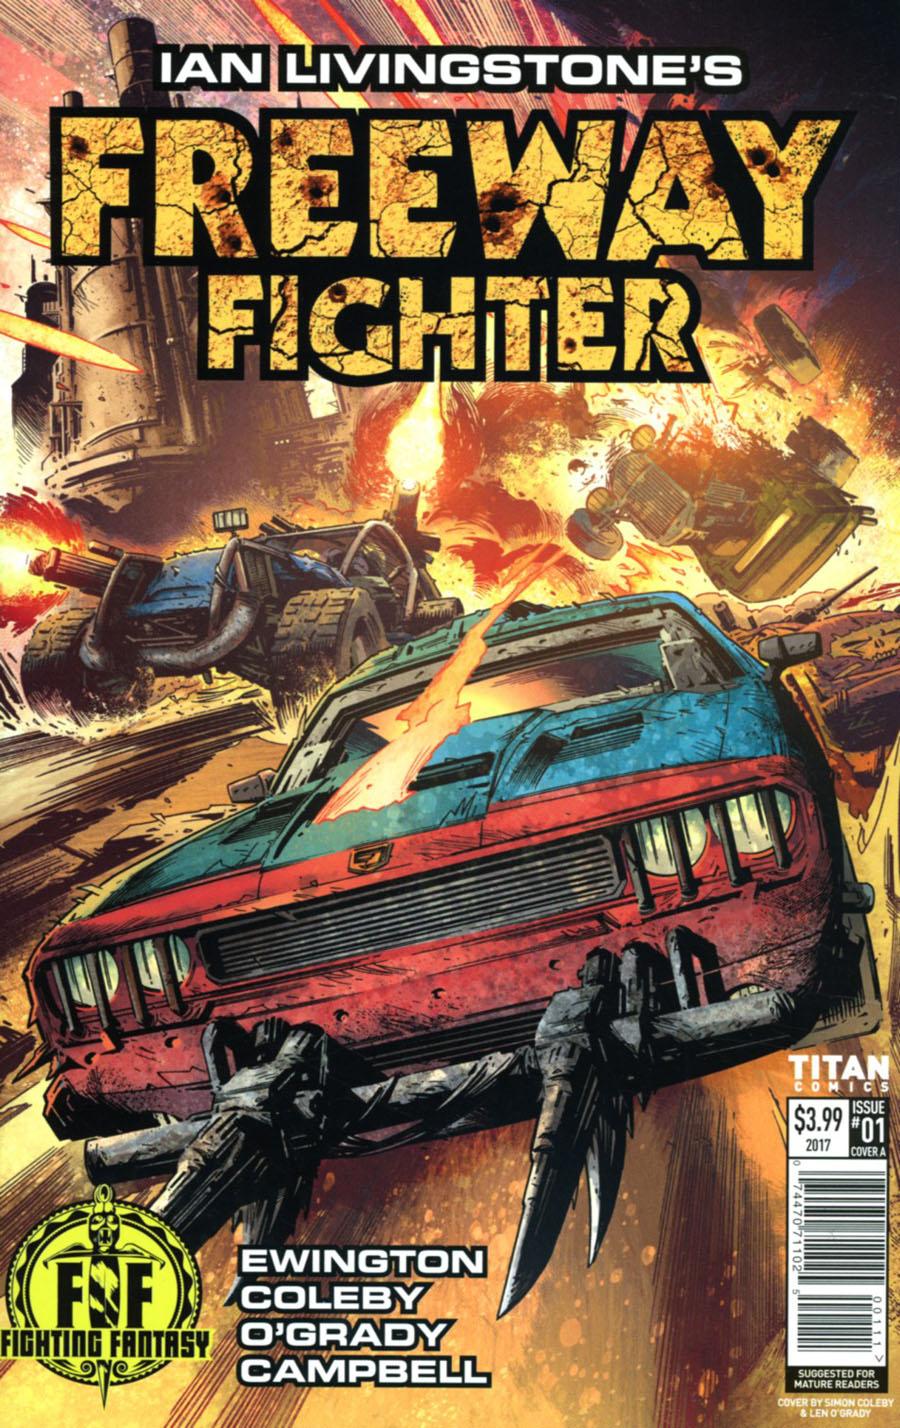 Ian Livingstones Freeway Fighter Vol. 1 #1